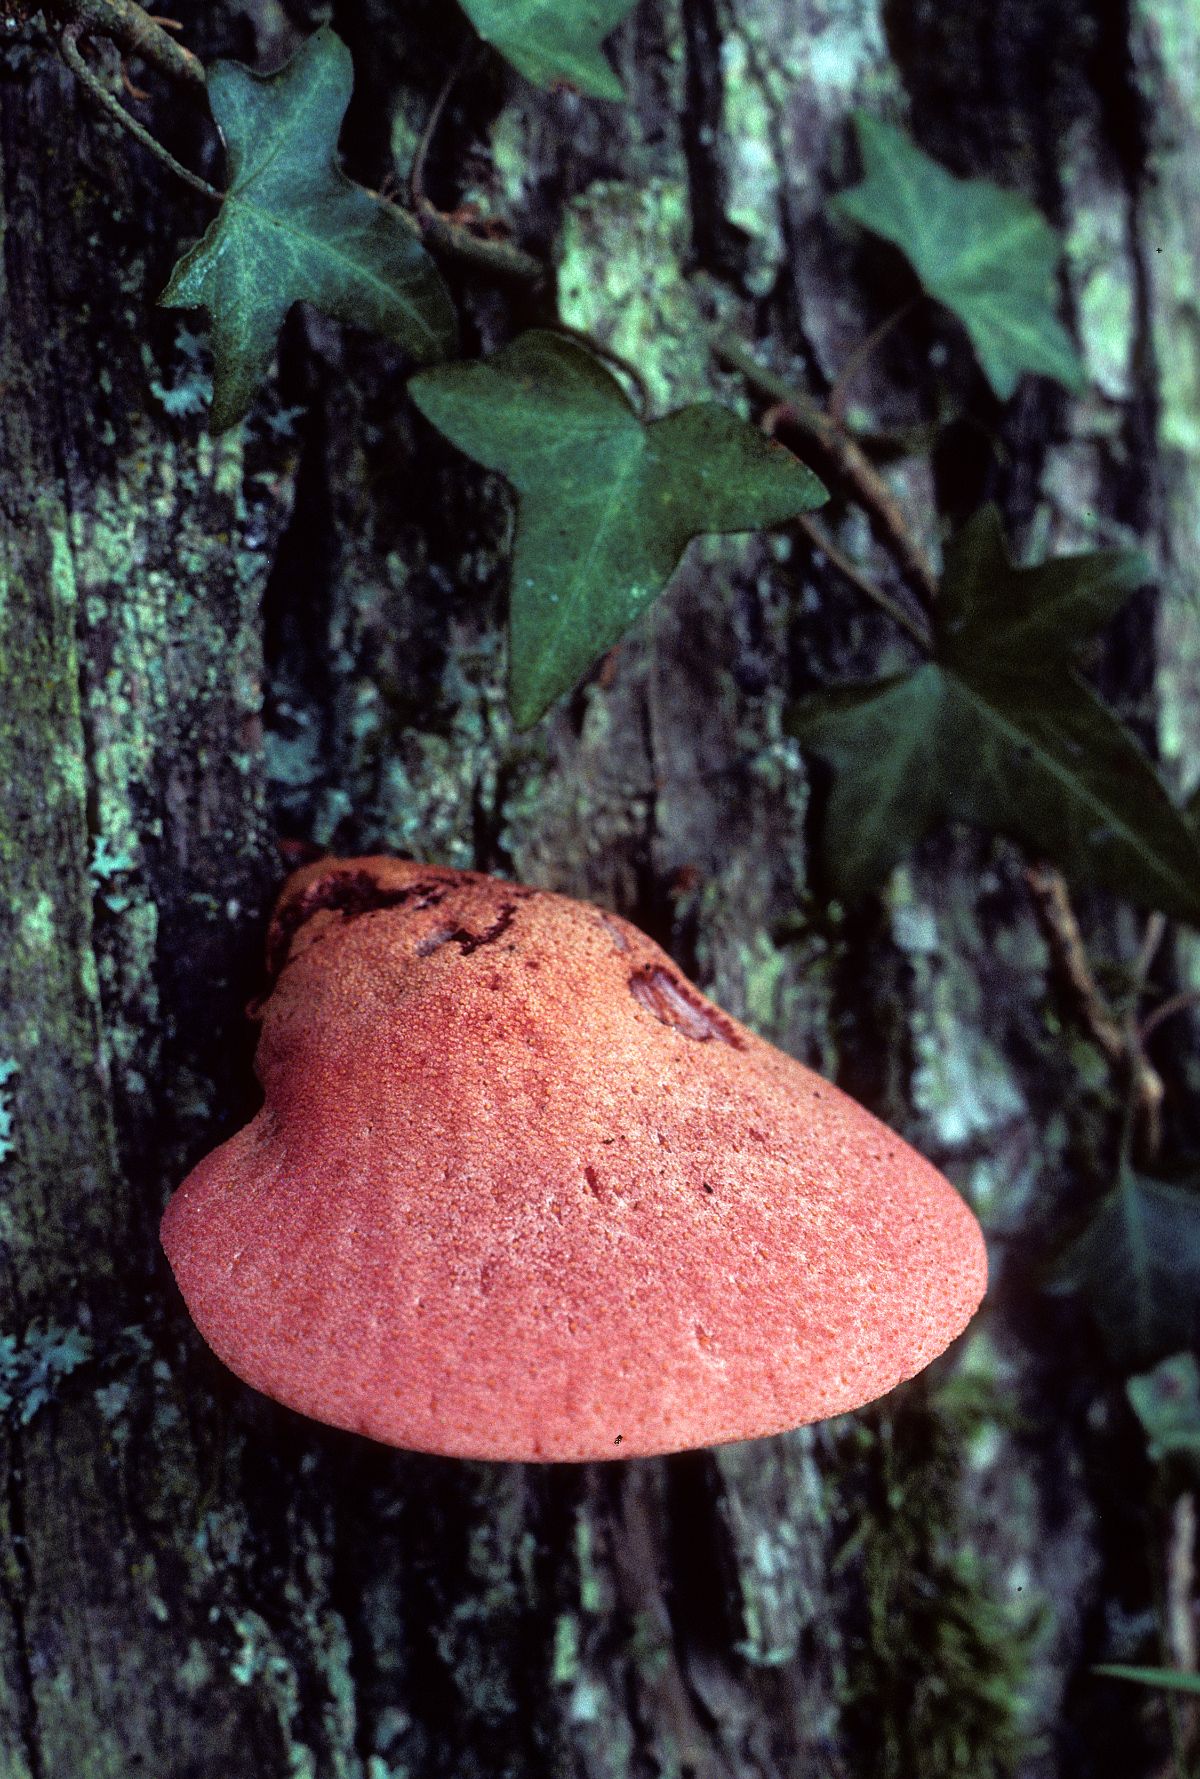 single young beefsteak mushroom